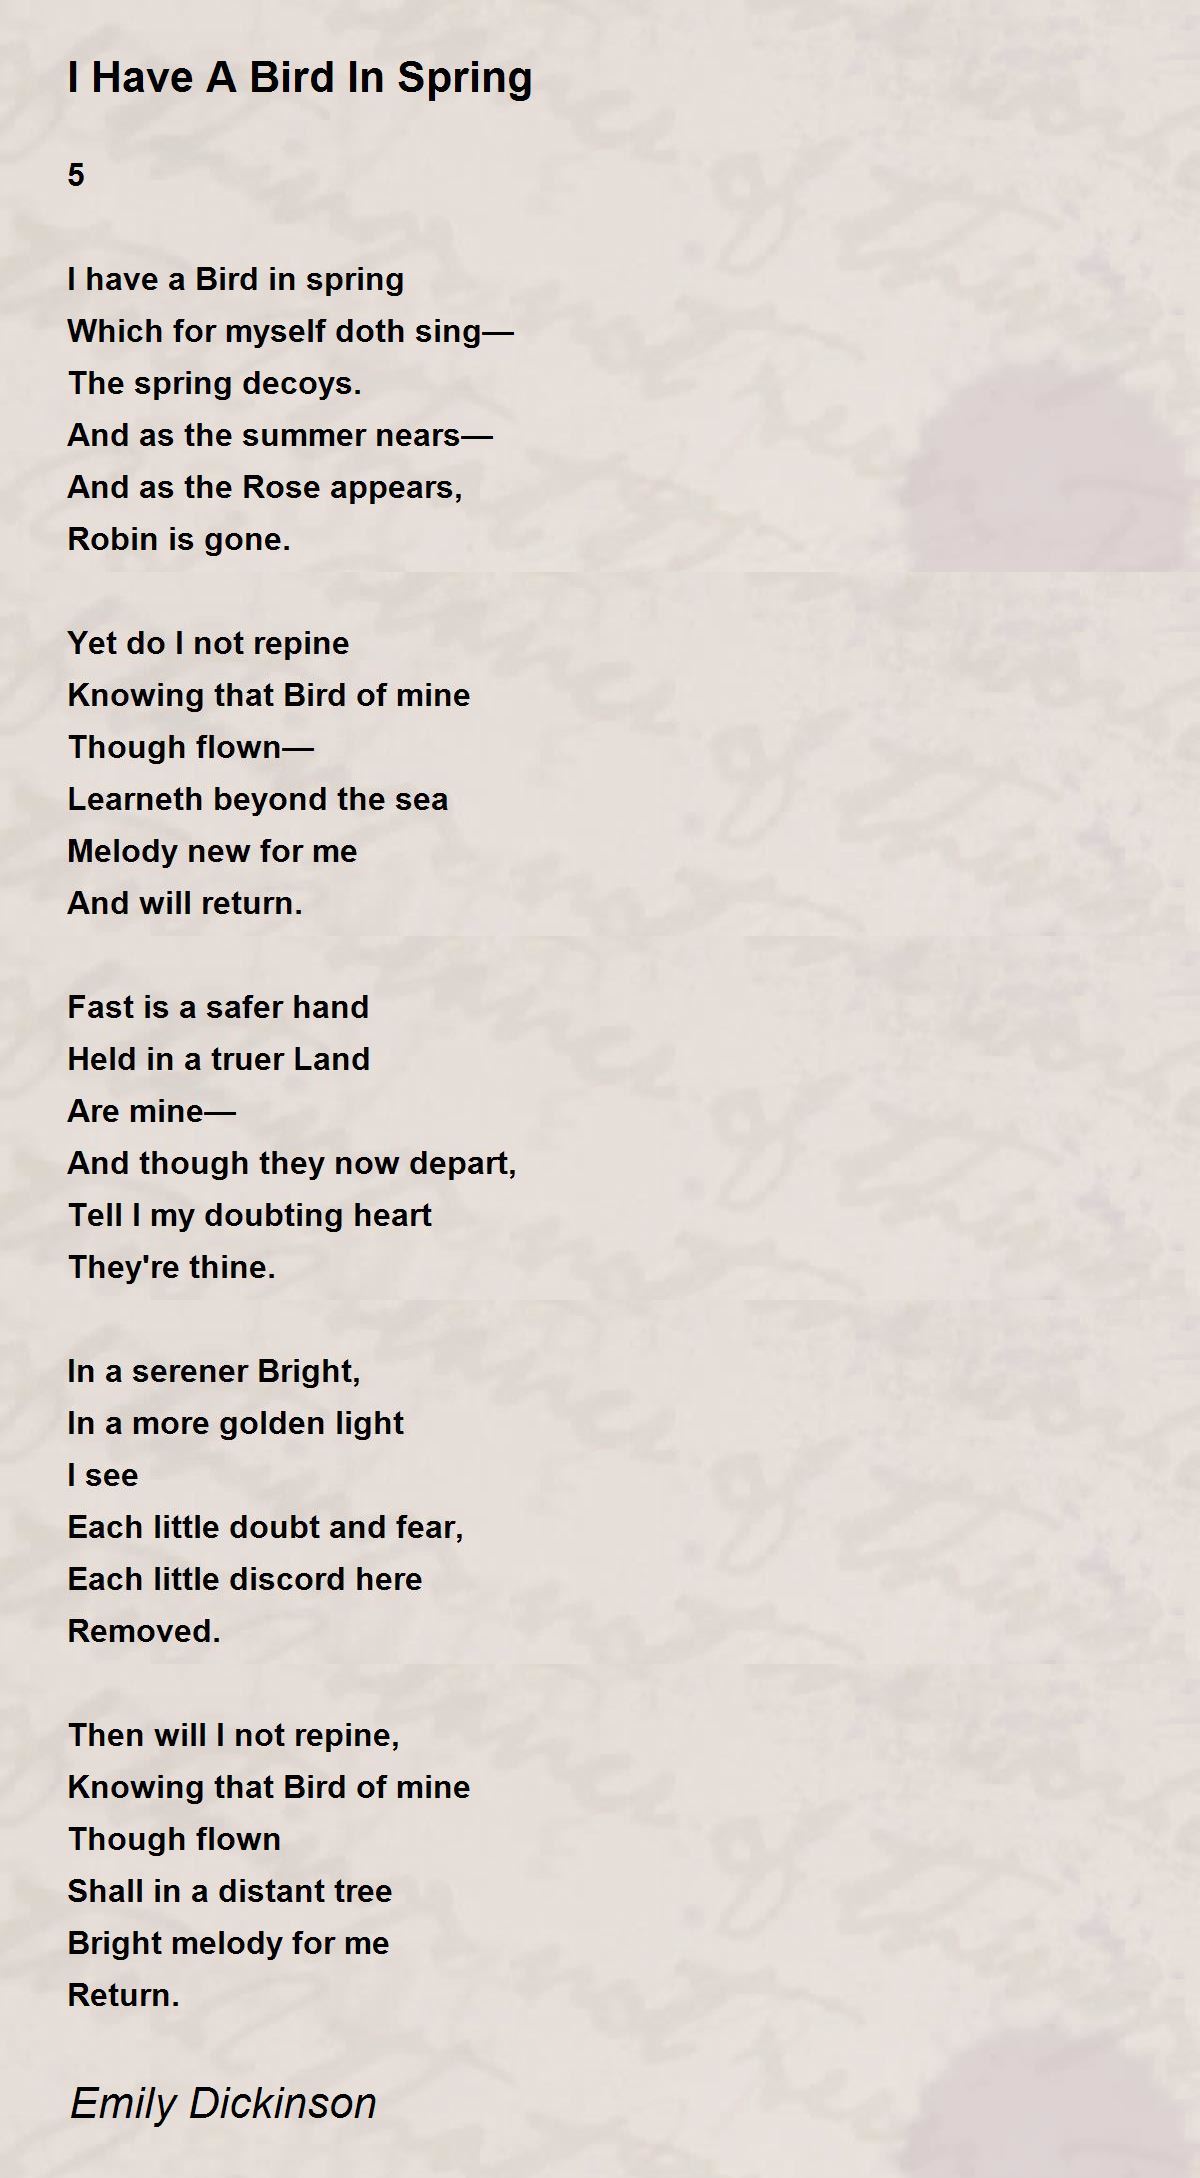 I Have A Bird In Spring Poem by Emily Dickinson - Poem Hunter